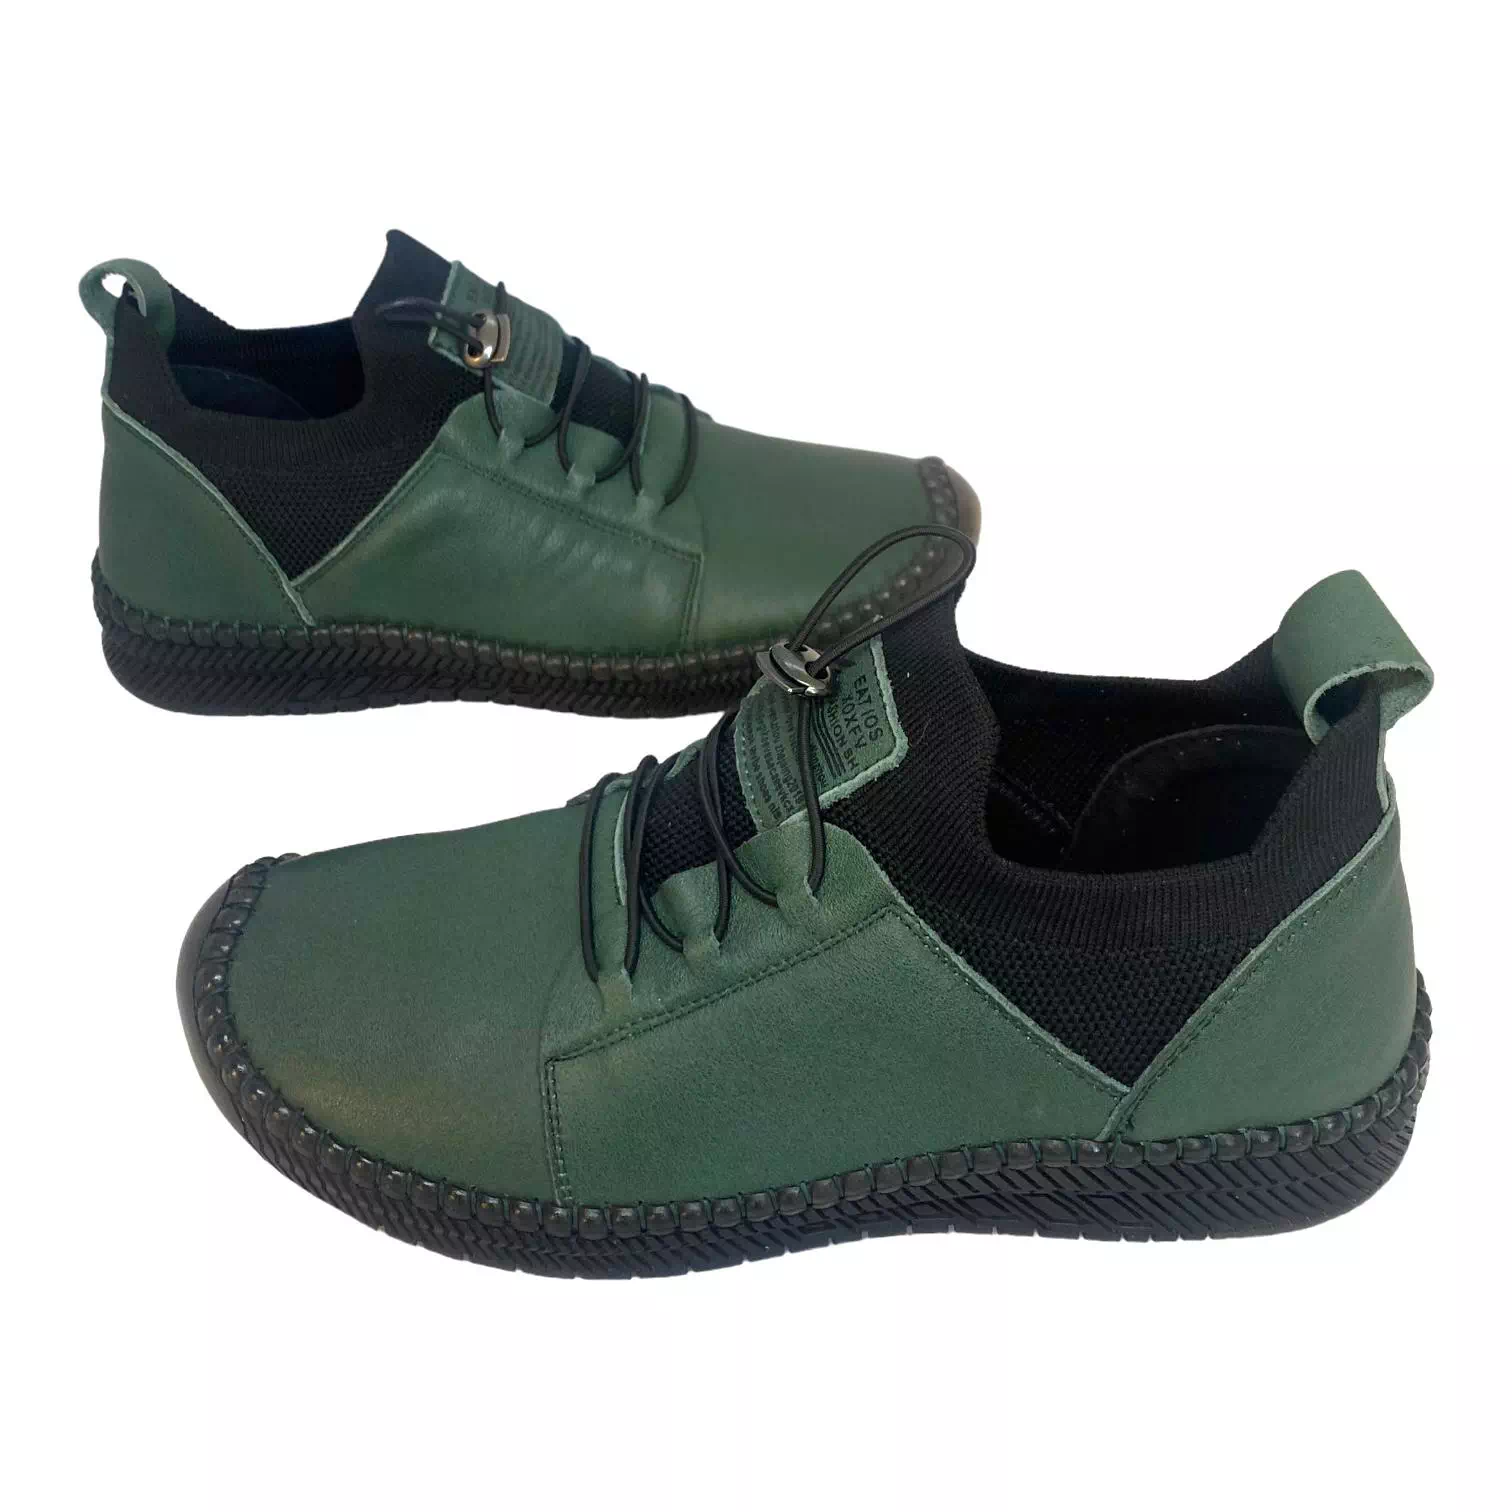 Pantofi slip-on verzi cu talpa cu detalii